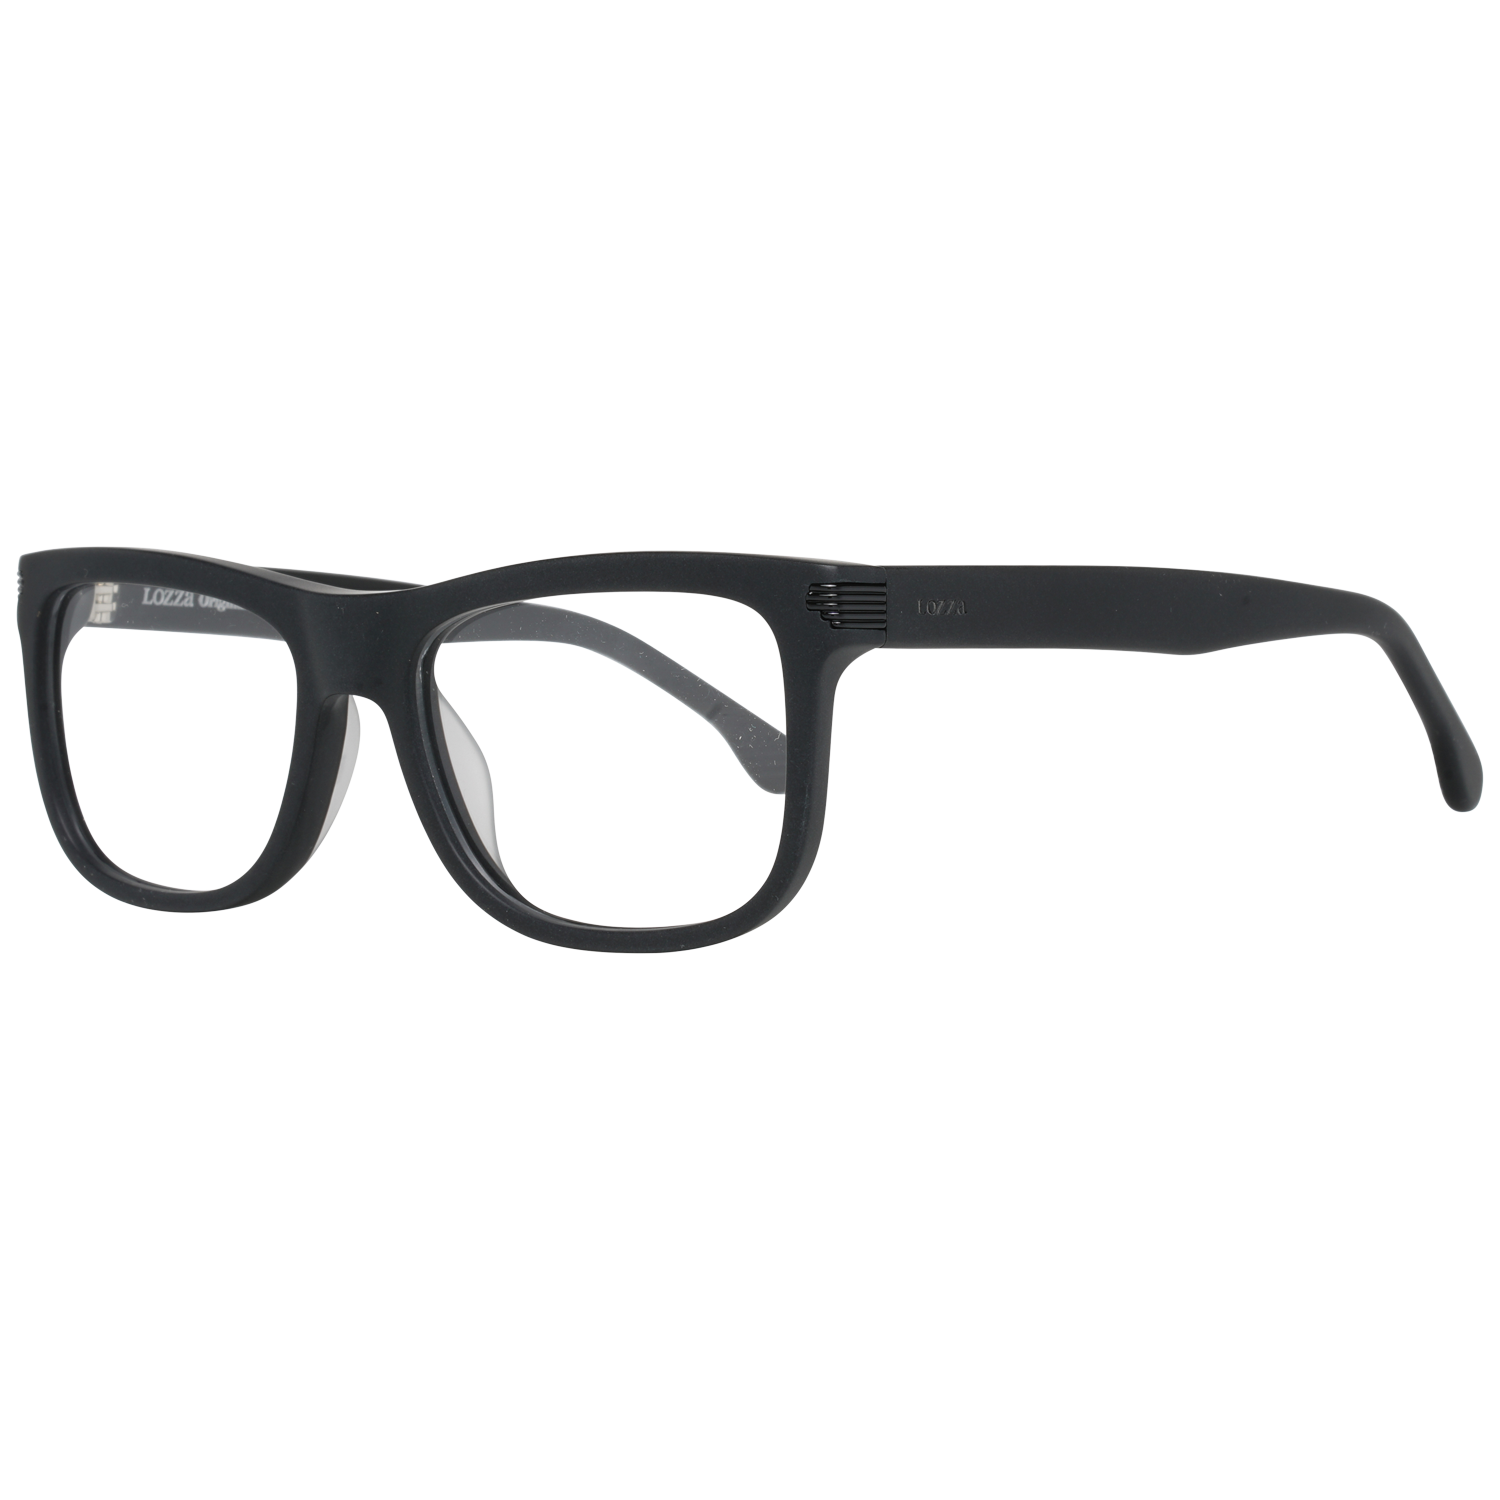 Lozza Frames Lozza Optical Frame VL4122 BLKM 51 Eyeglasses Eyewear UK USA Australia 